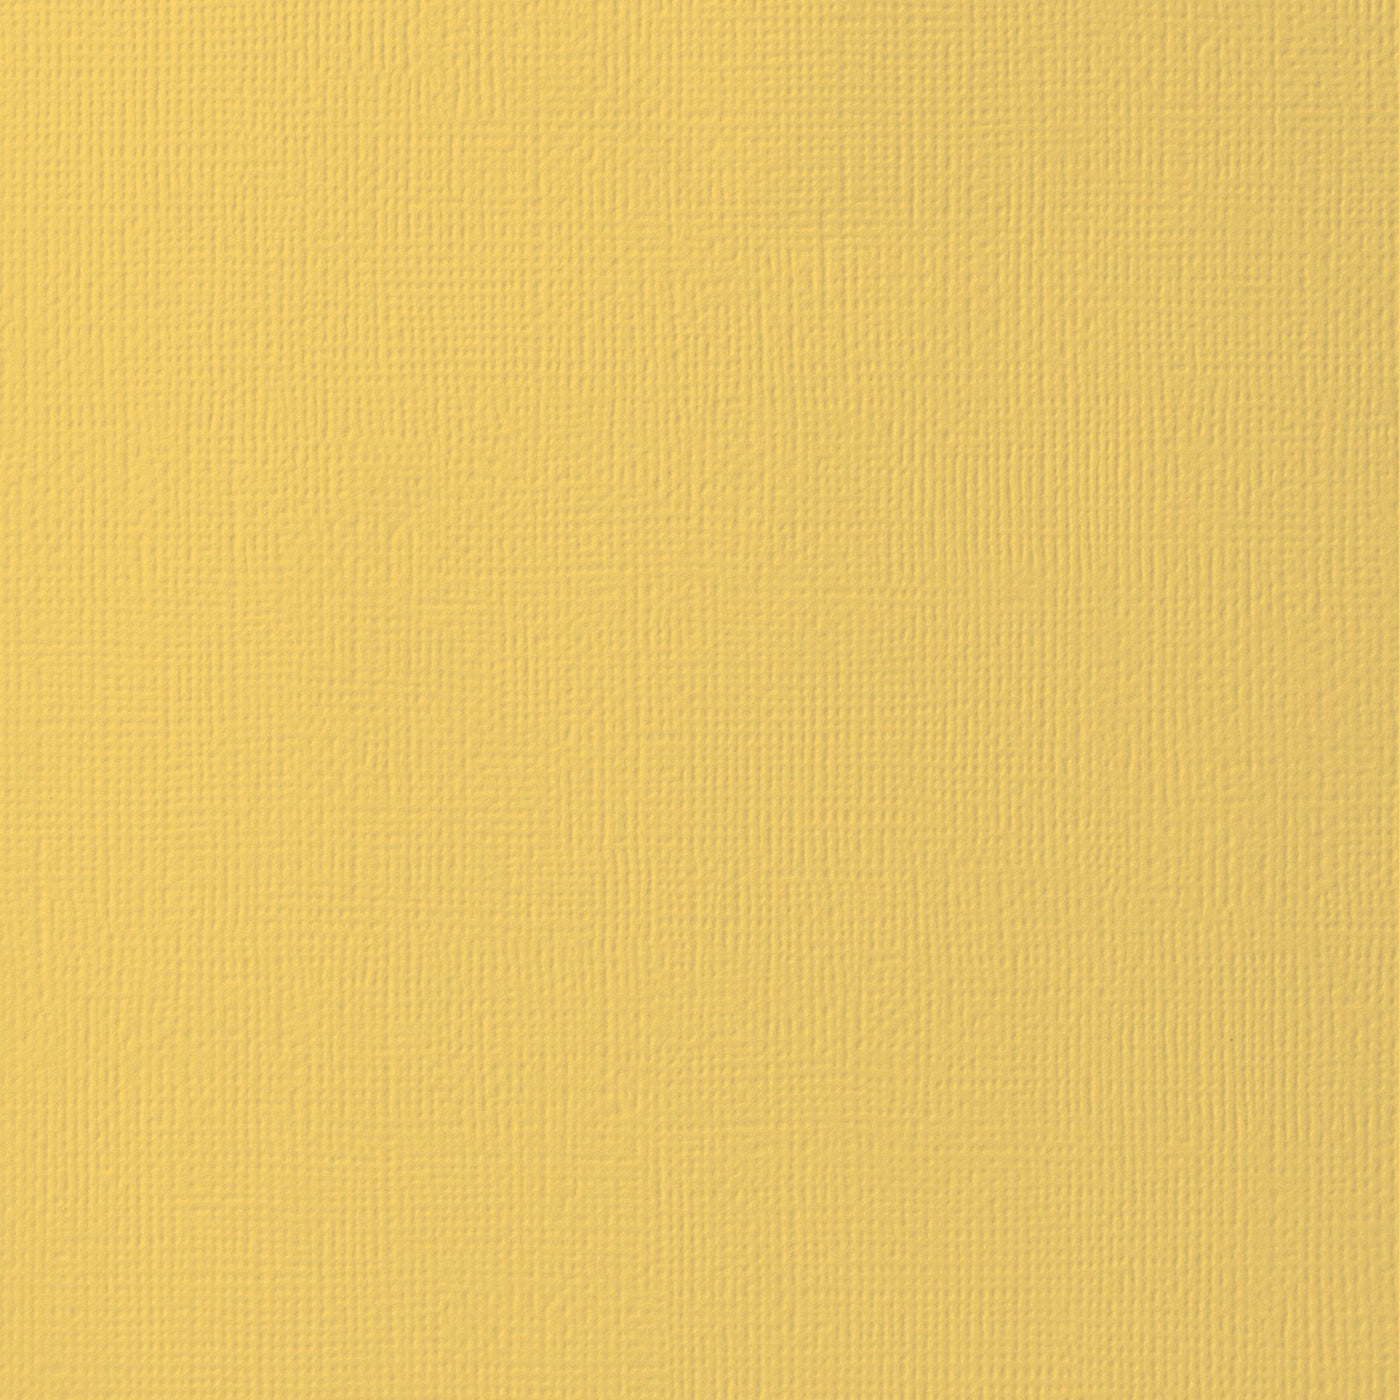 SUNFLOWER yellow cardstock - 12x12 inch - 80 lb - textured scrapbook paper - American Crafts